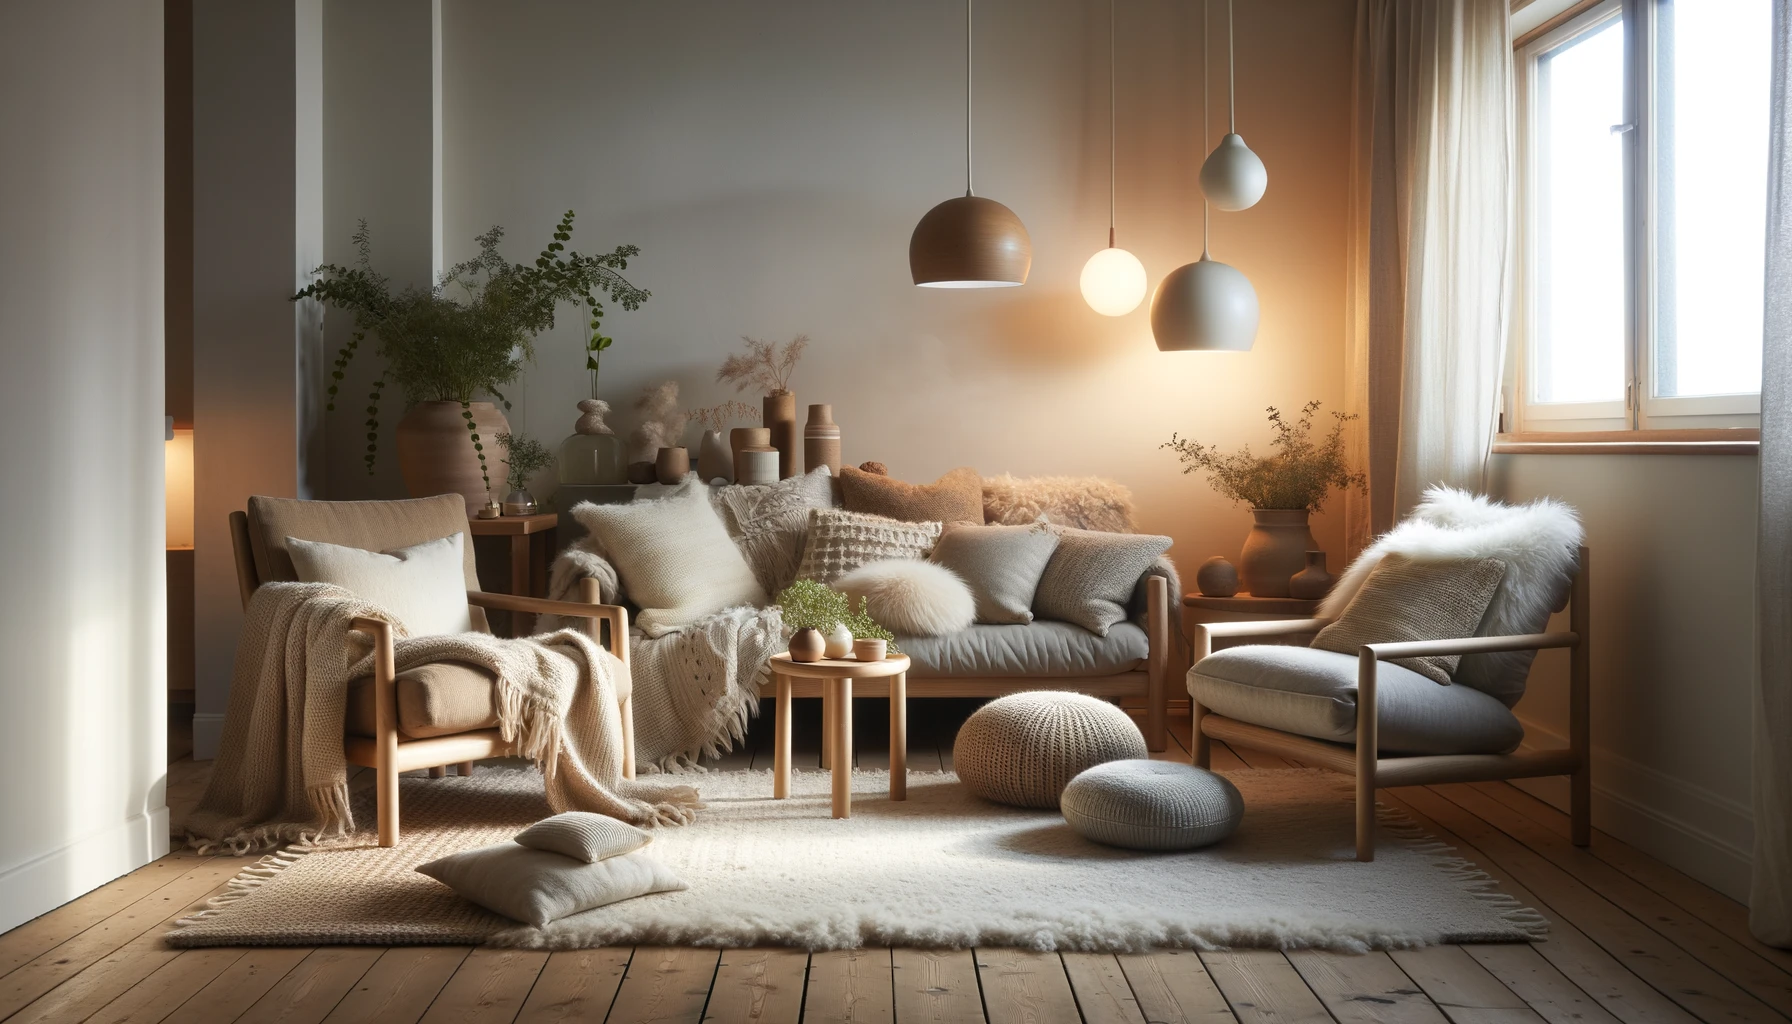 Cozy living room with modern Scandinavian interior design.